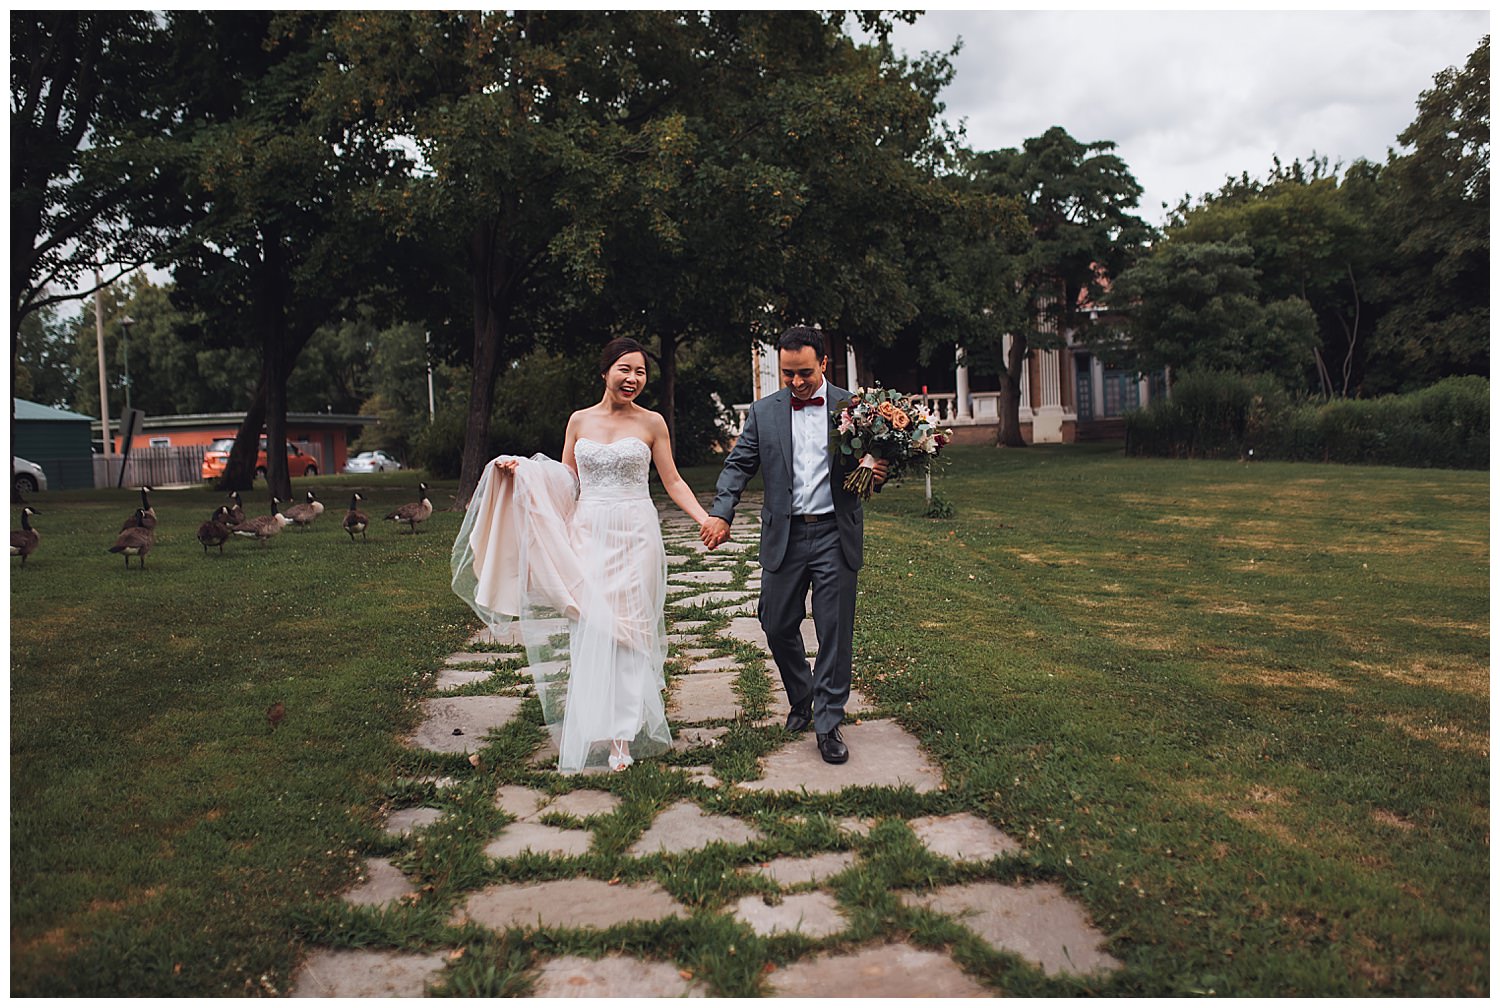 Columbus Park Refectory Wedding, garden bride and groom walking